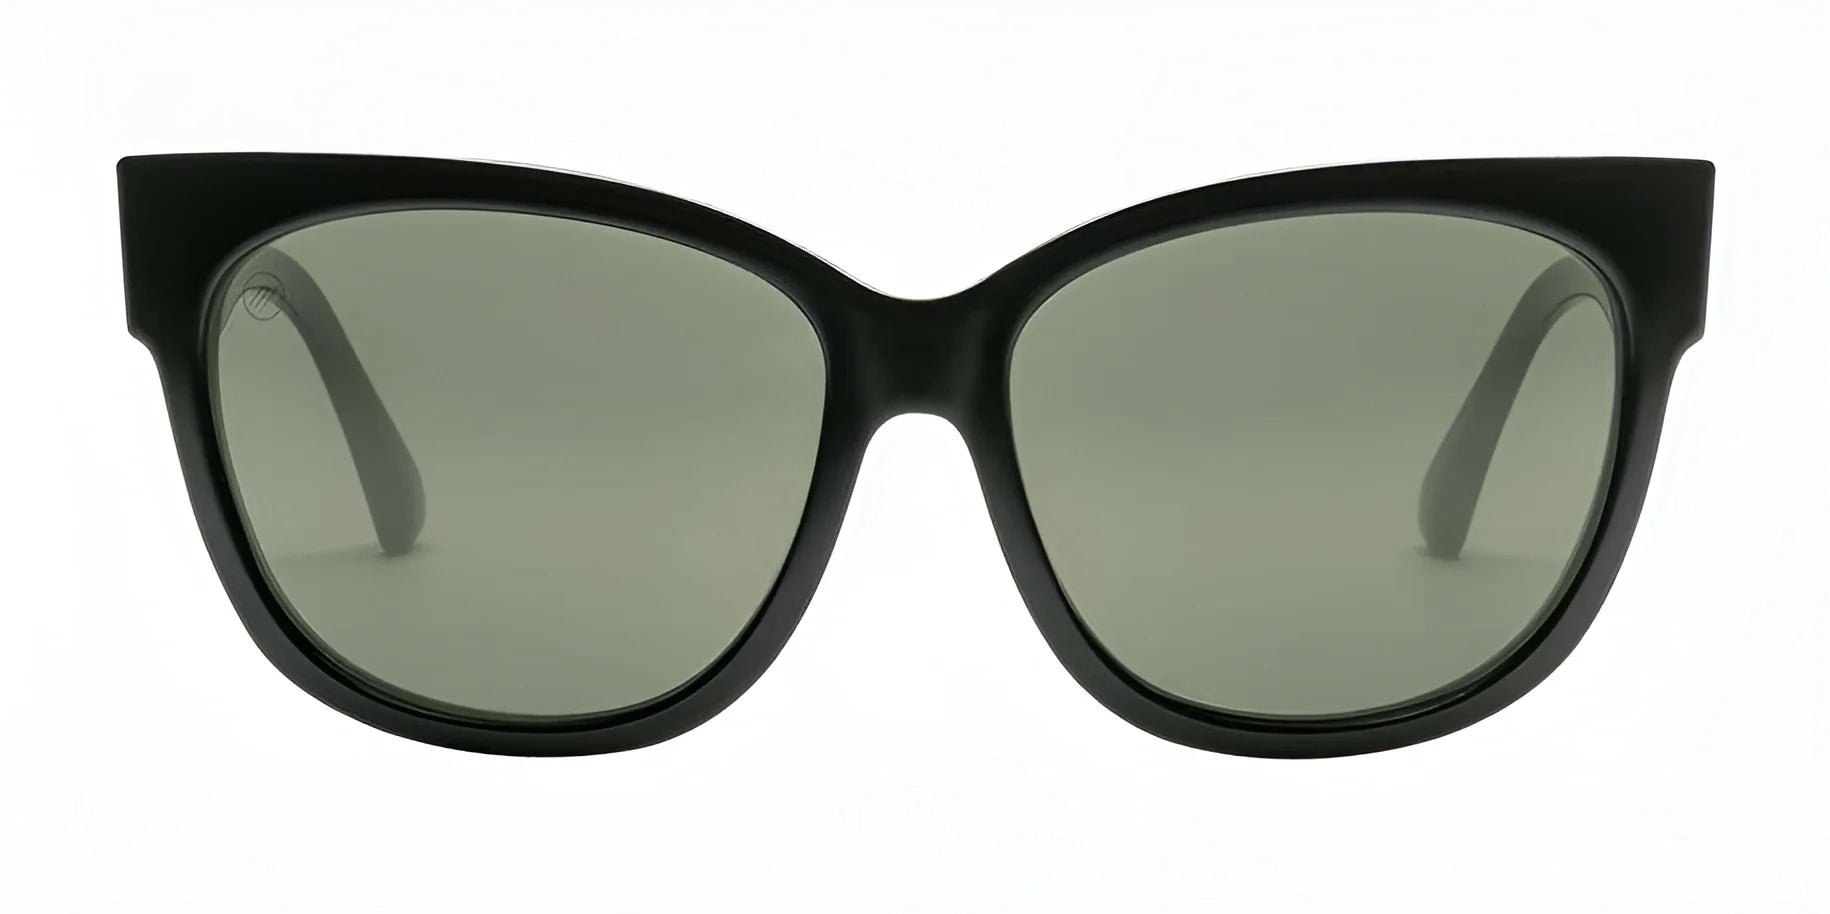 Electric Danger Cat Sunglasses Gloss Black / Grey Polarized